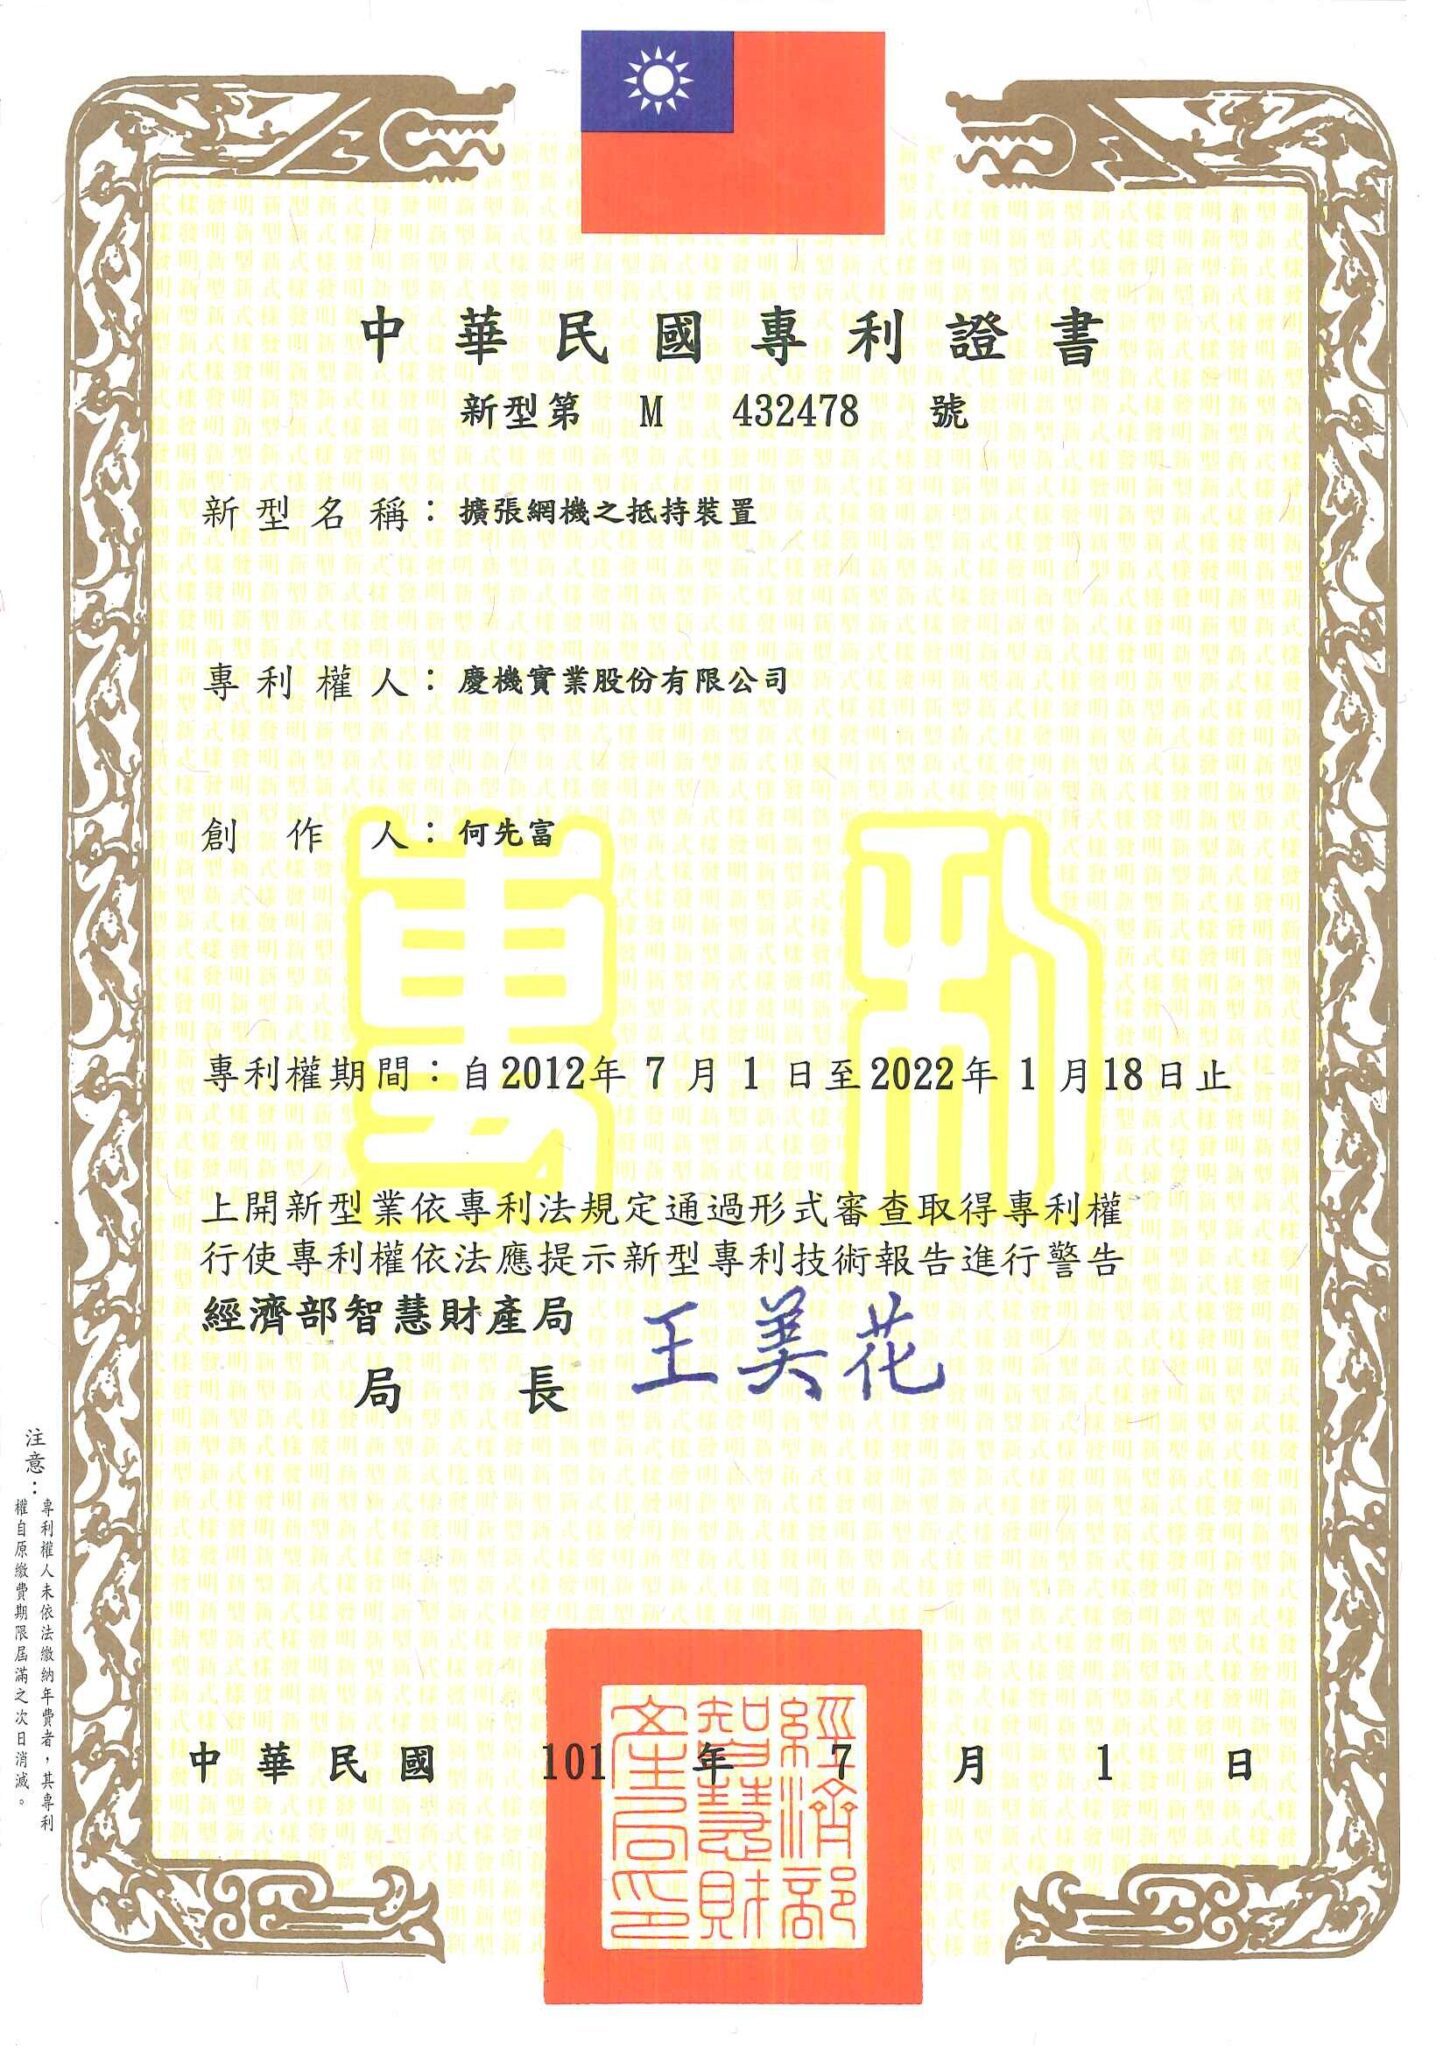 KEN GI patent certificate